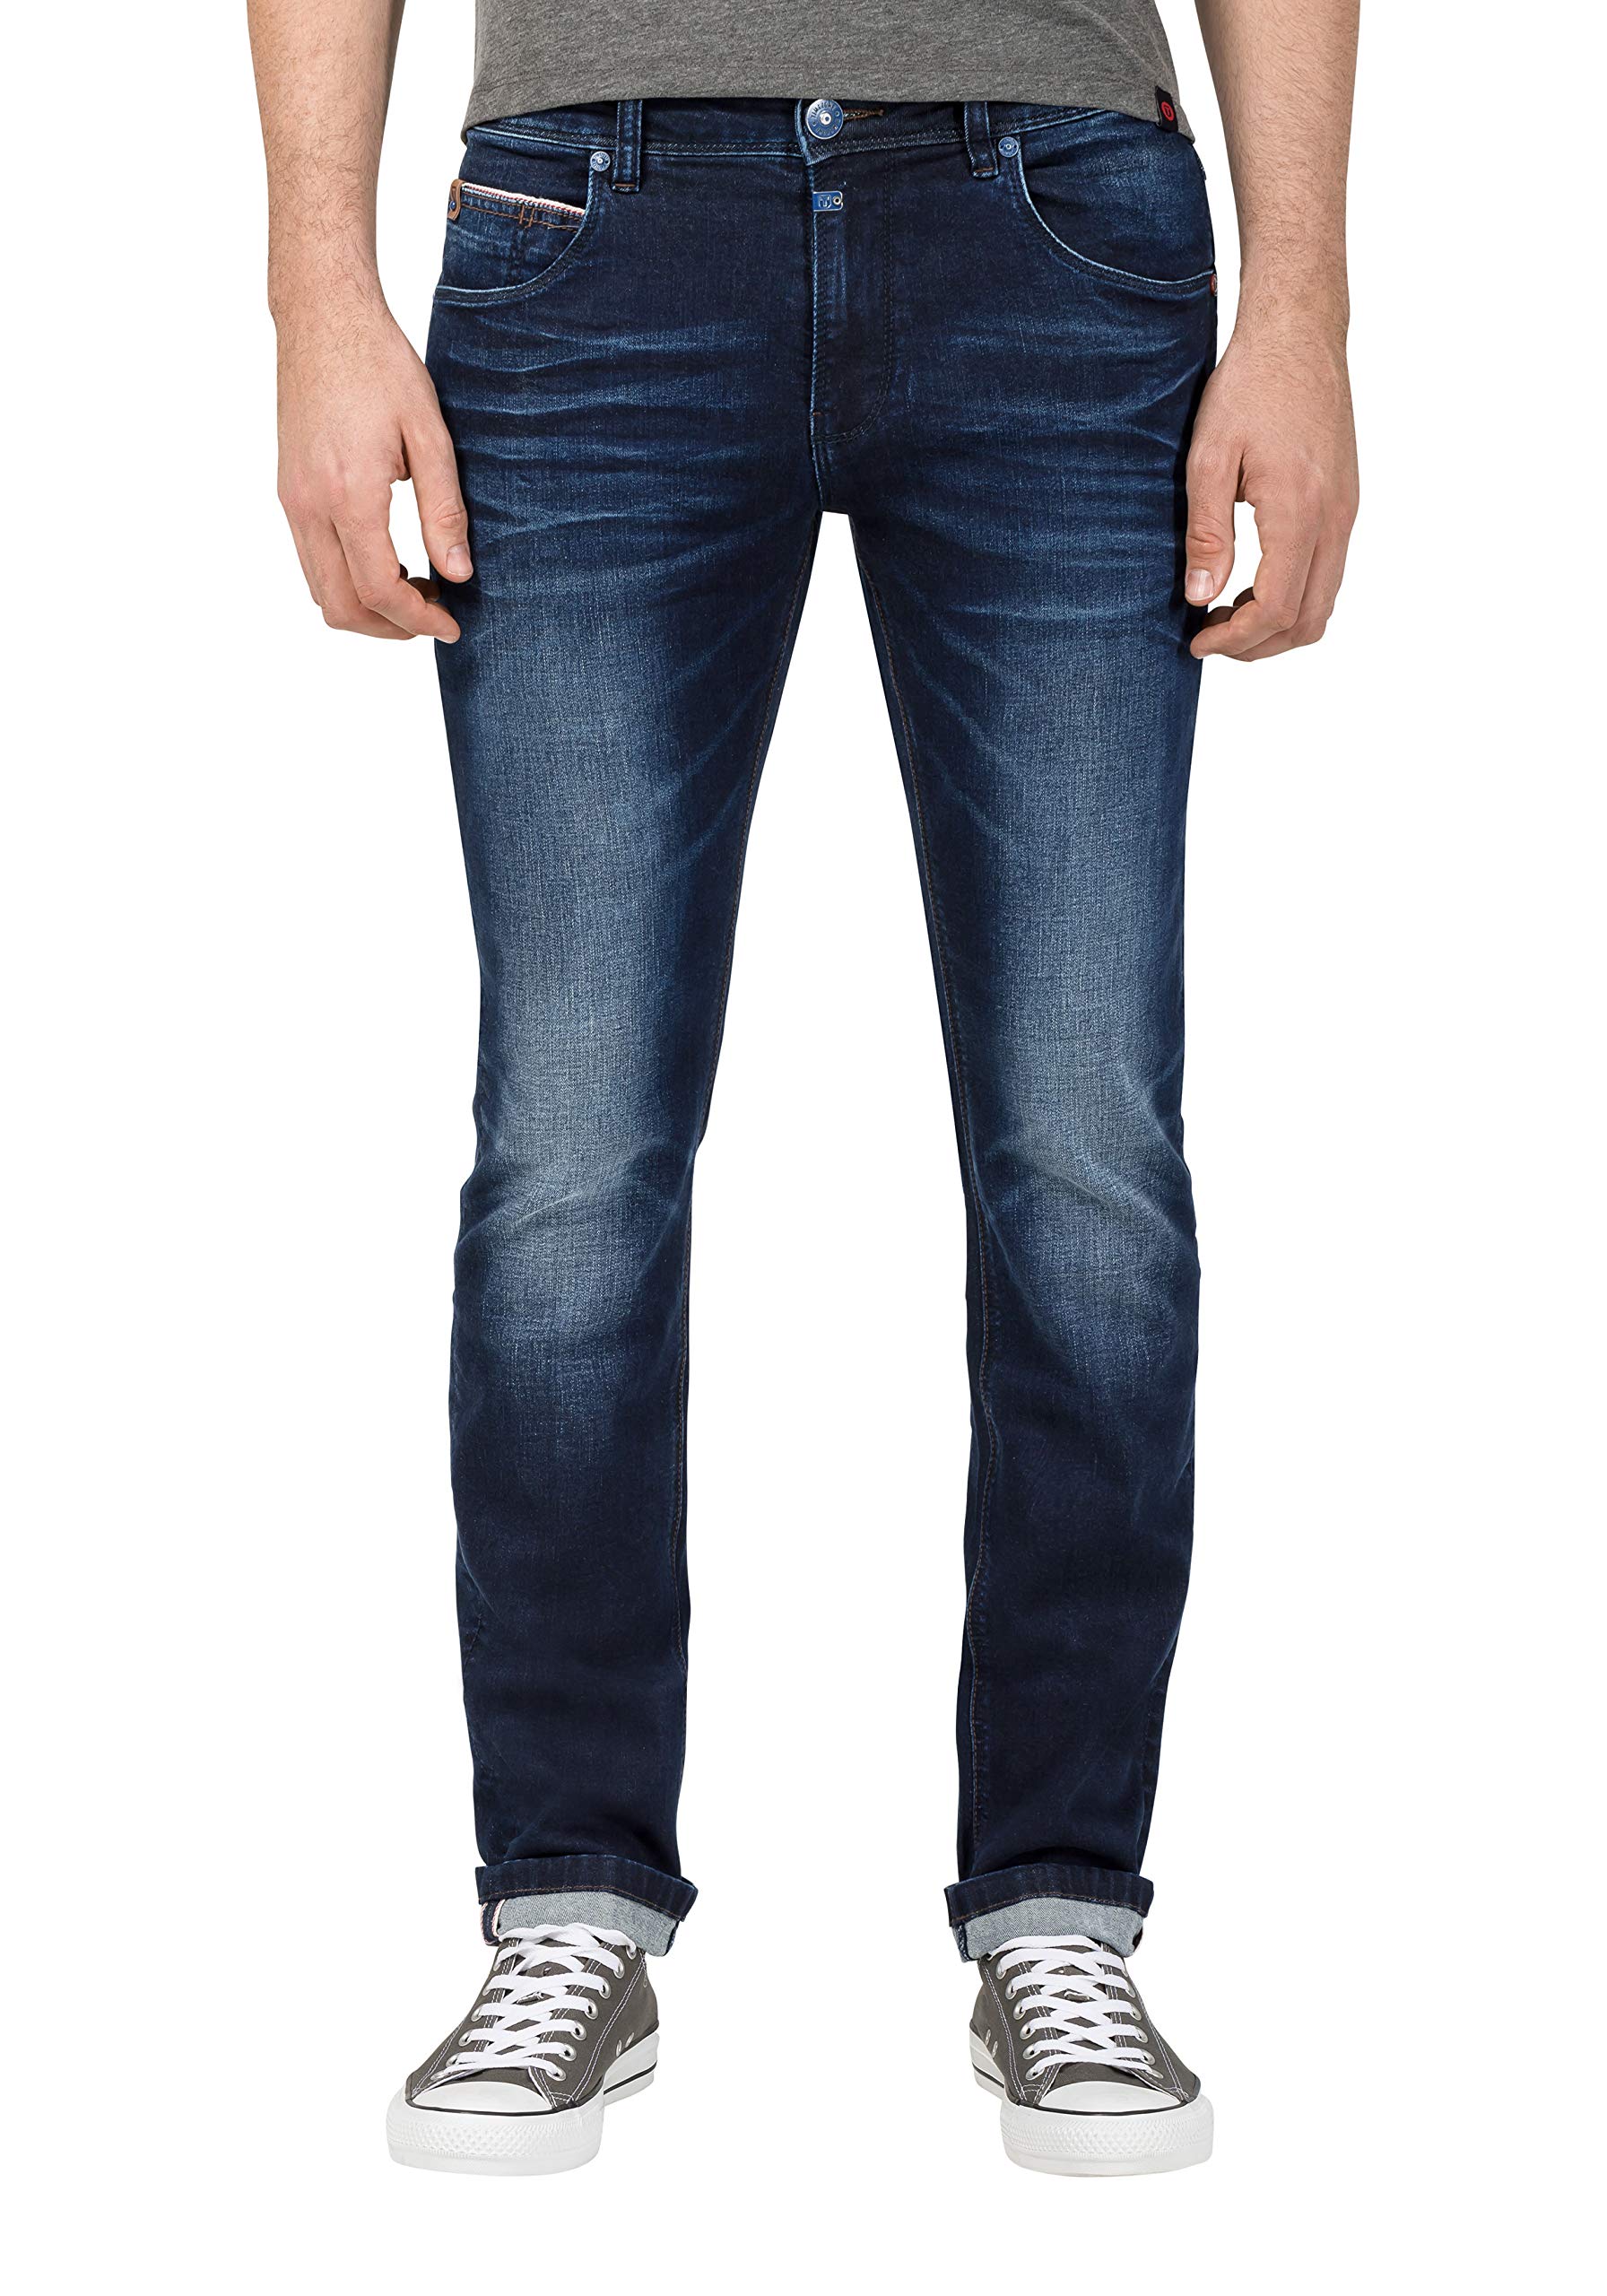 Timezone Herren Slim ScottTZ Skinny Jeans, Blau (Aged Navy wash 3322), 33W / 32L